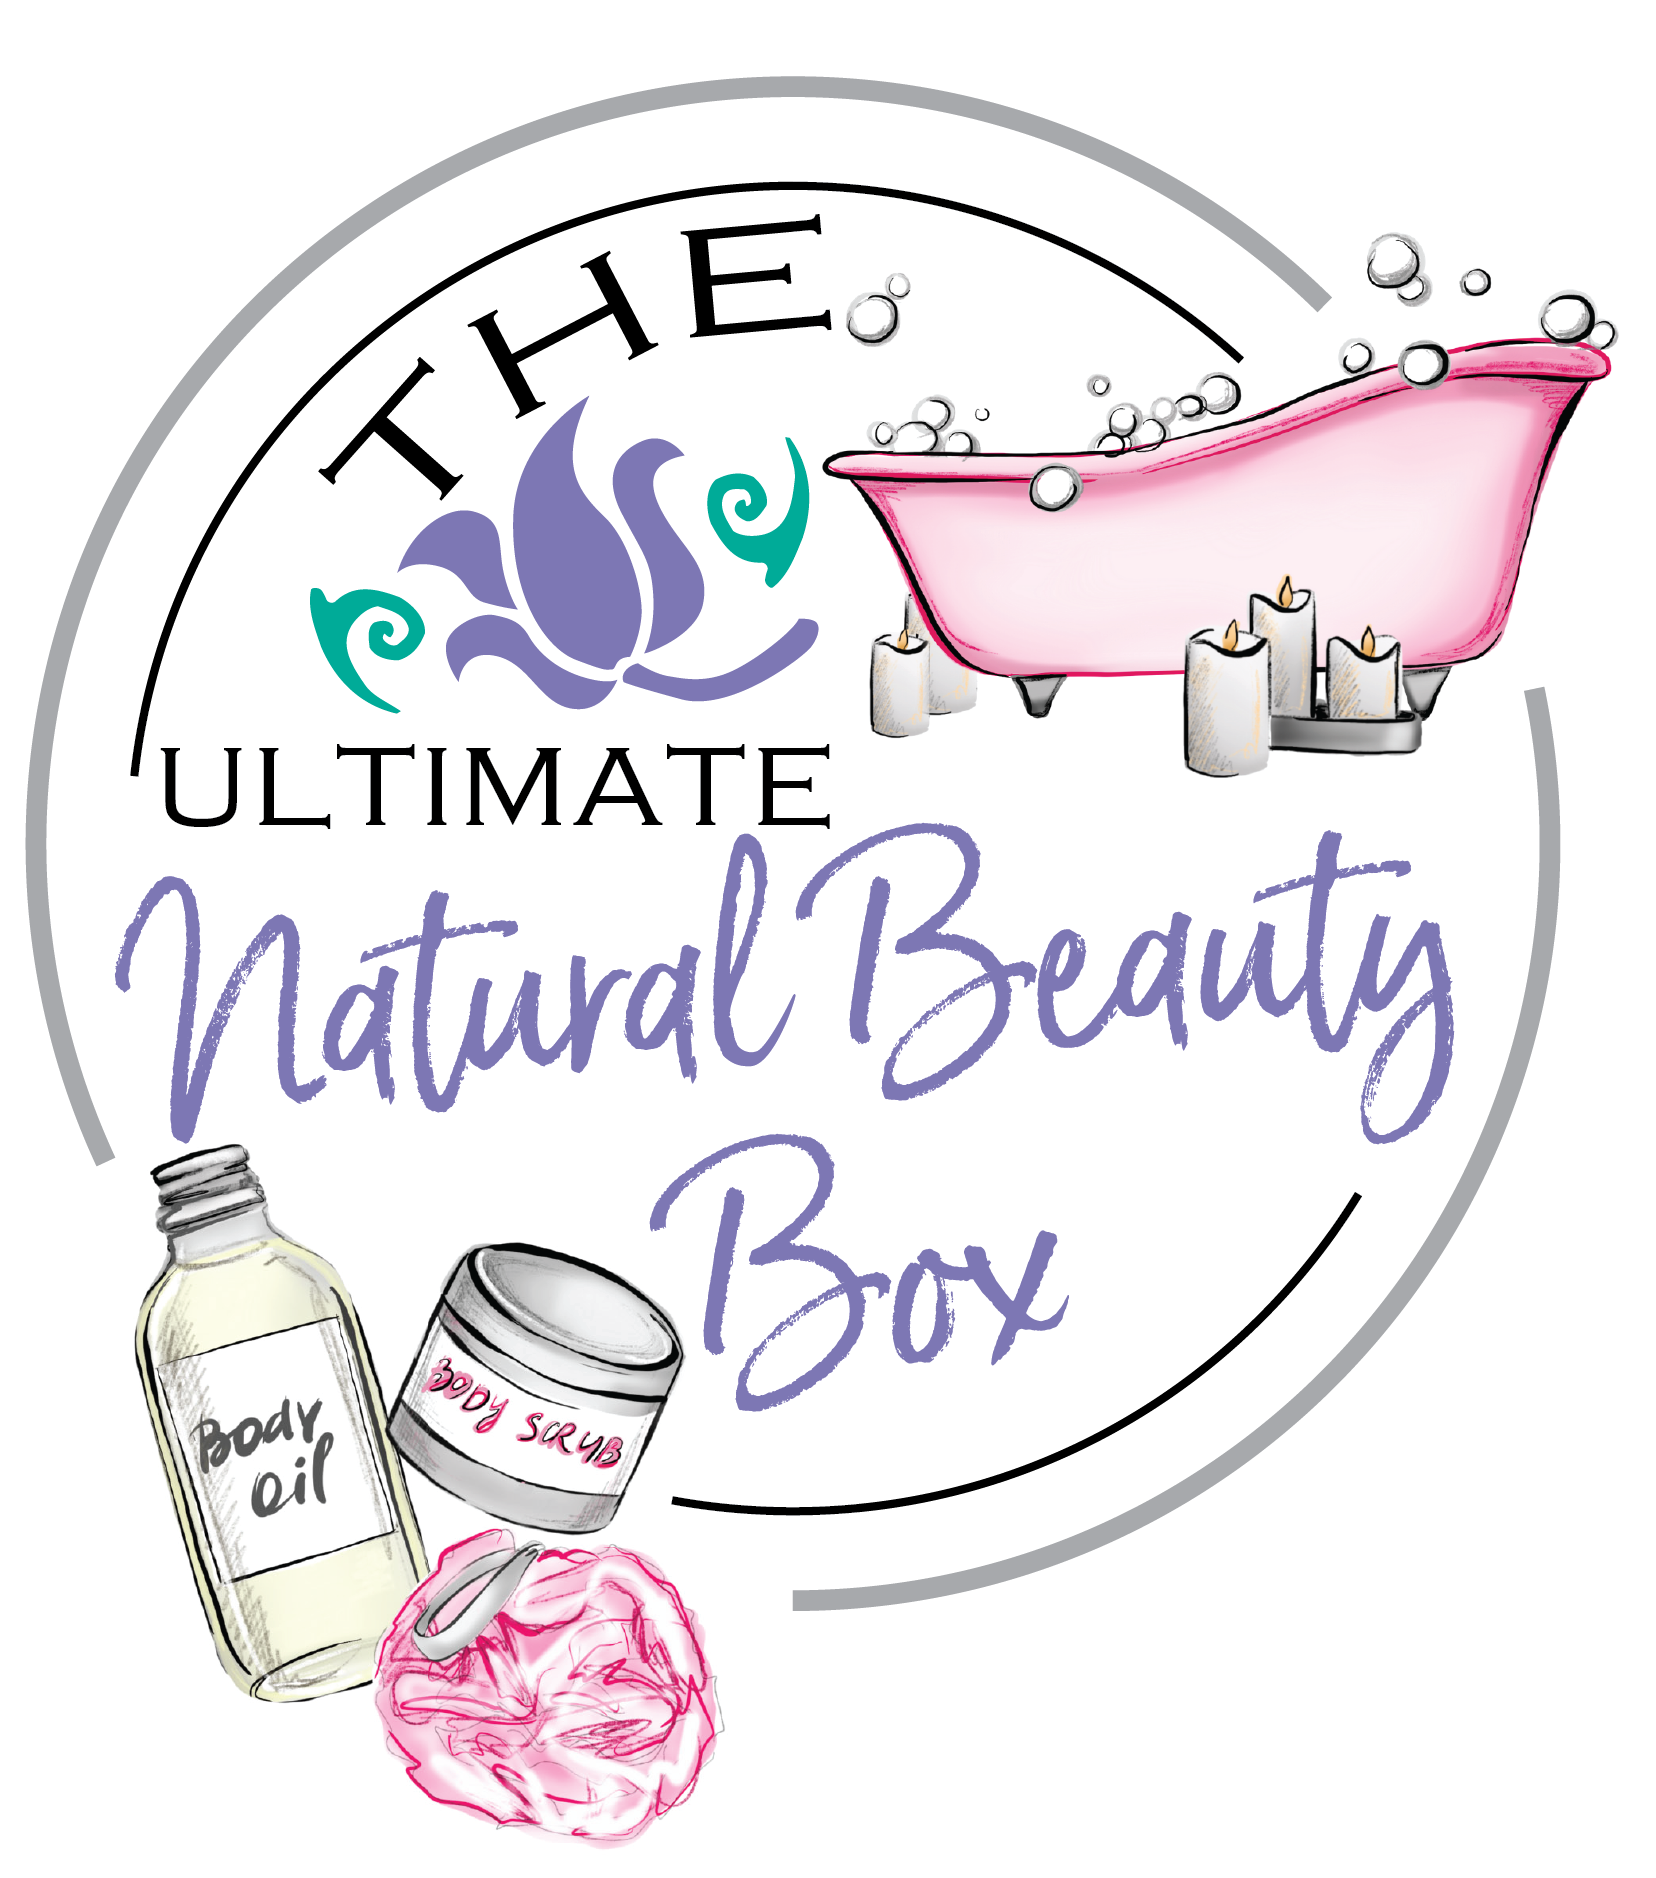 Combo Sub Box: The Ultimate Natural Beauty Box